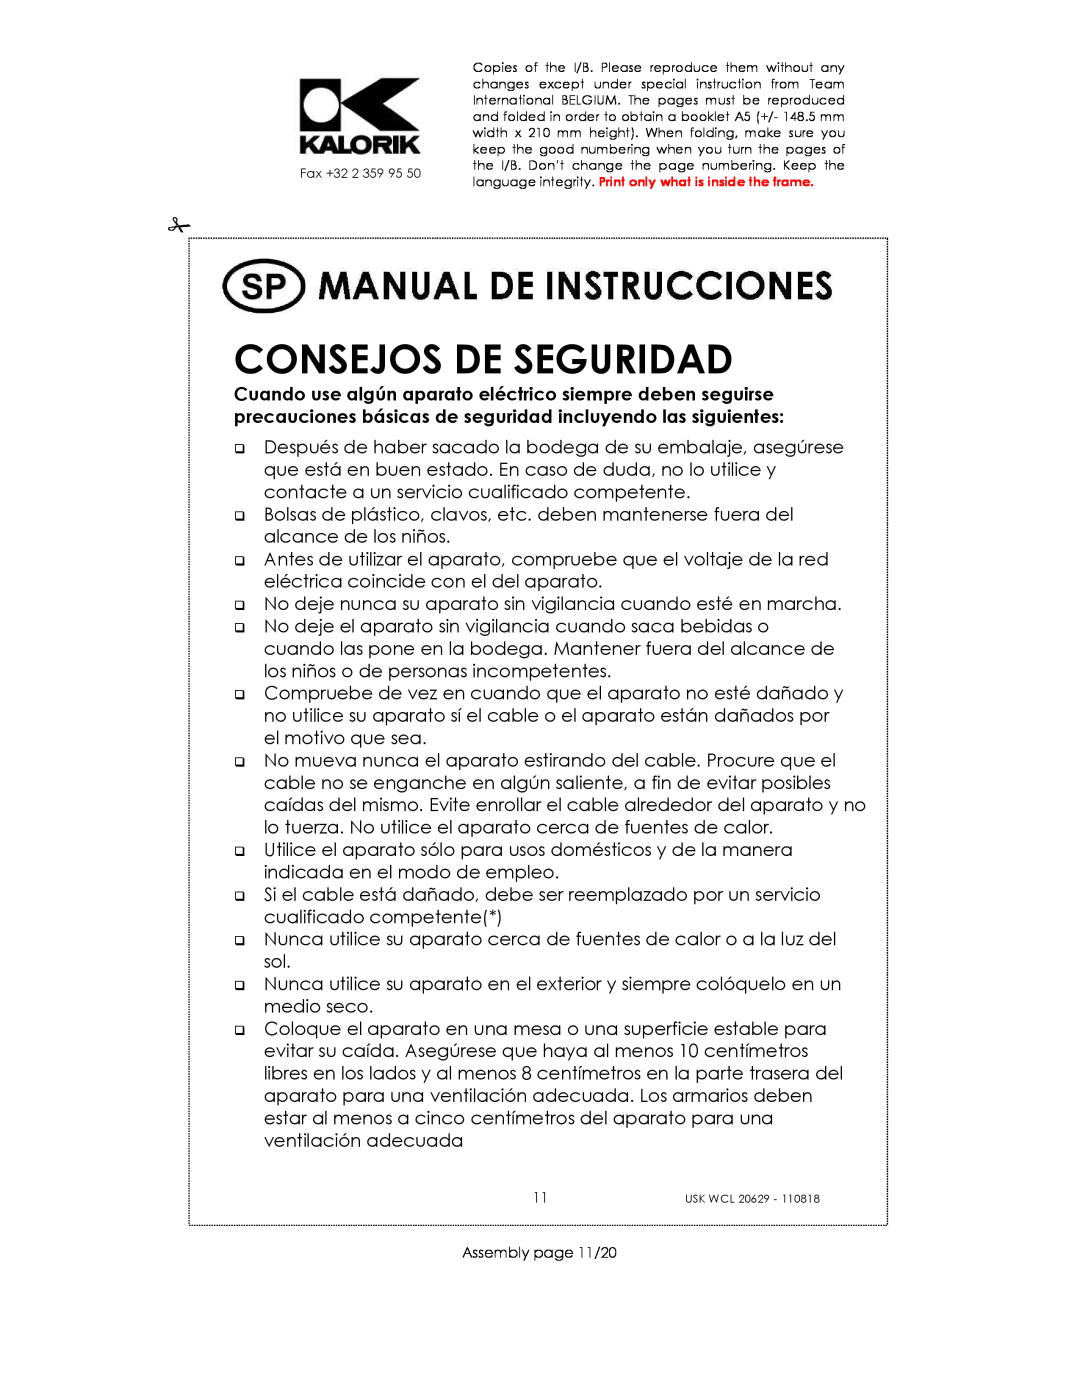 Kalorik USK WCL 20629 manual Consejos De Seguridad, Assembly page 11/20 